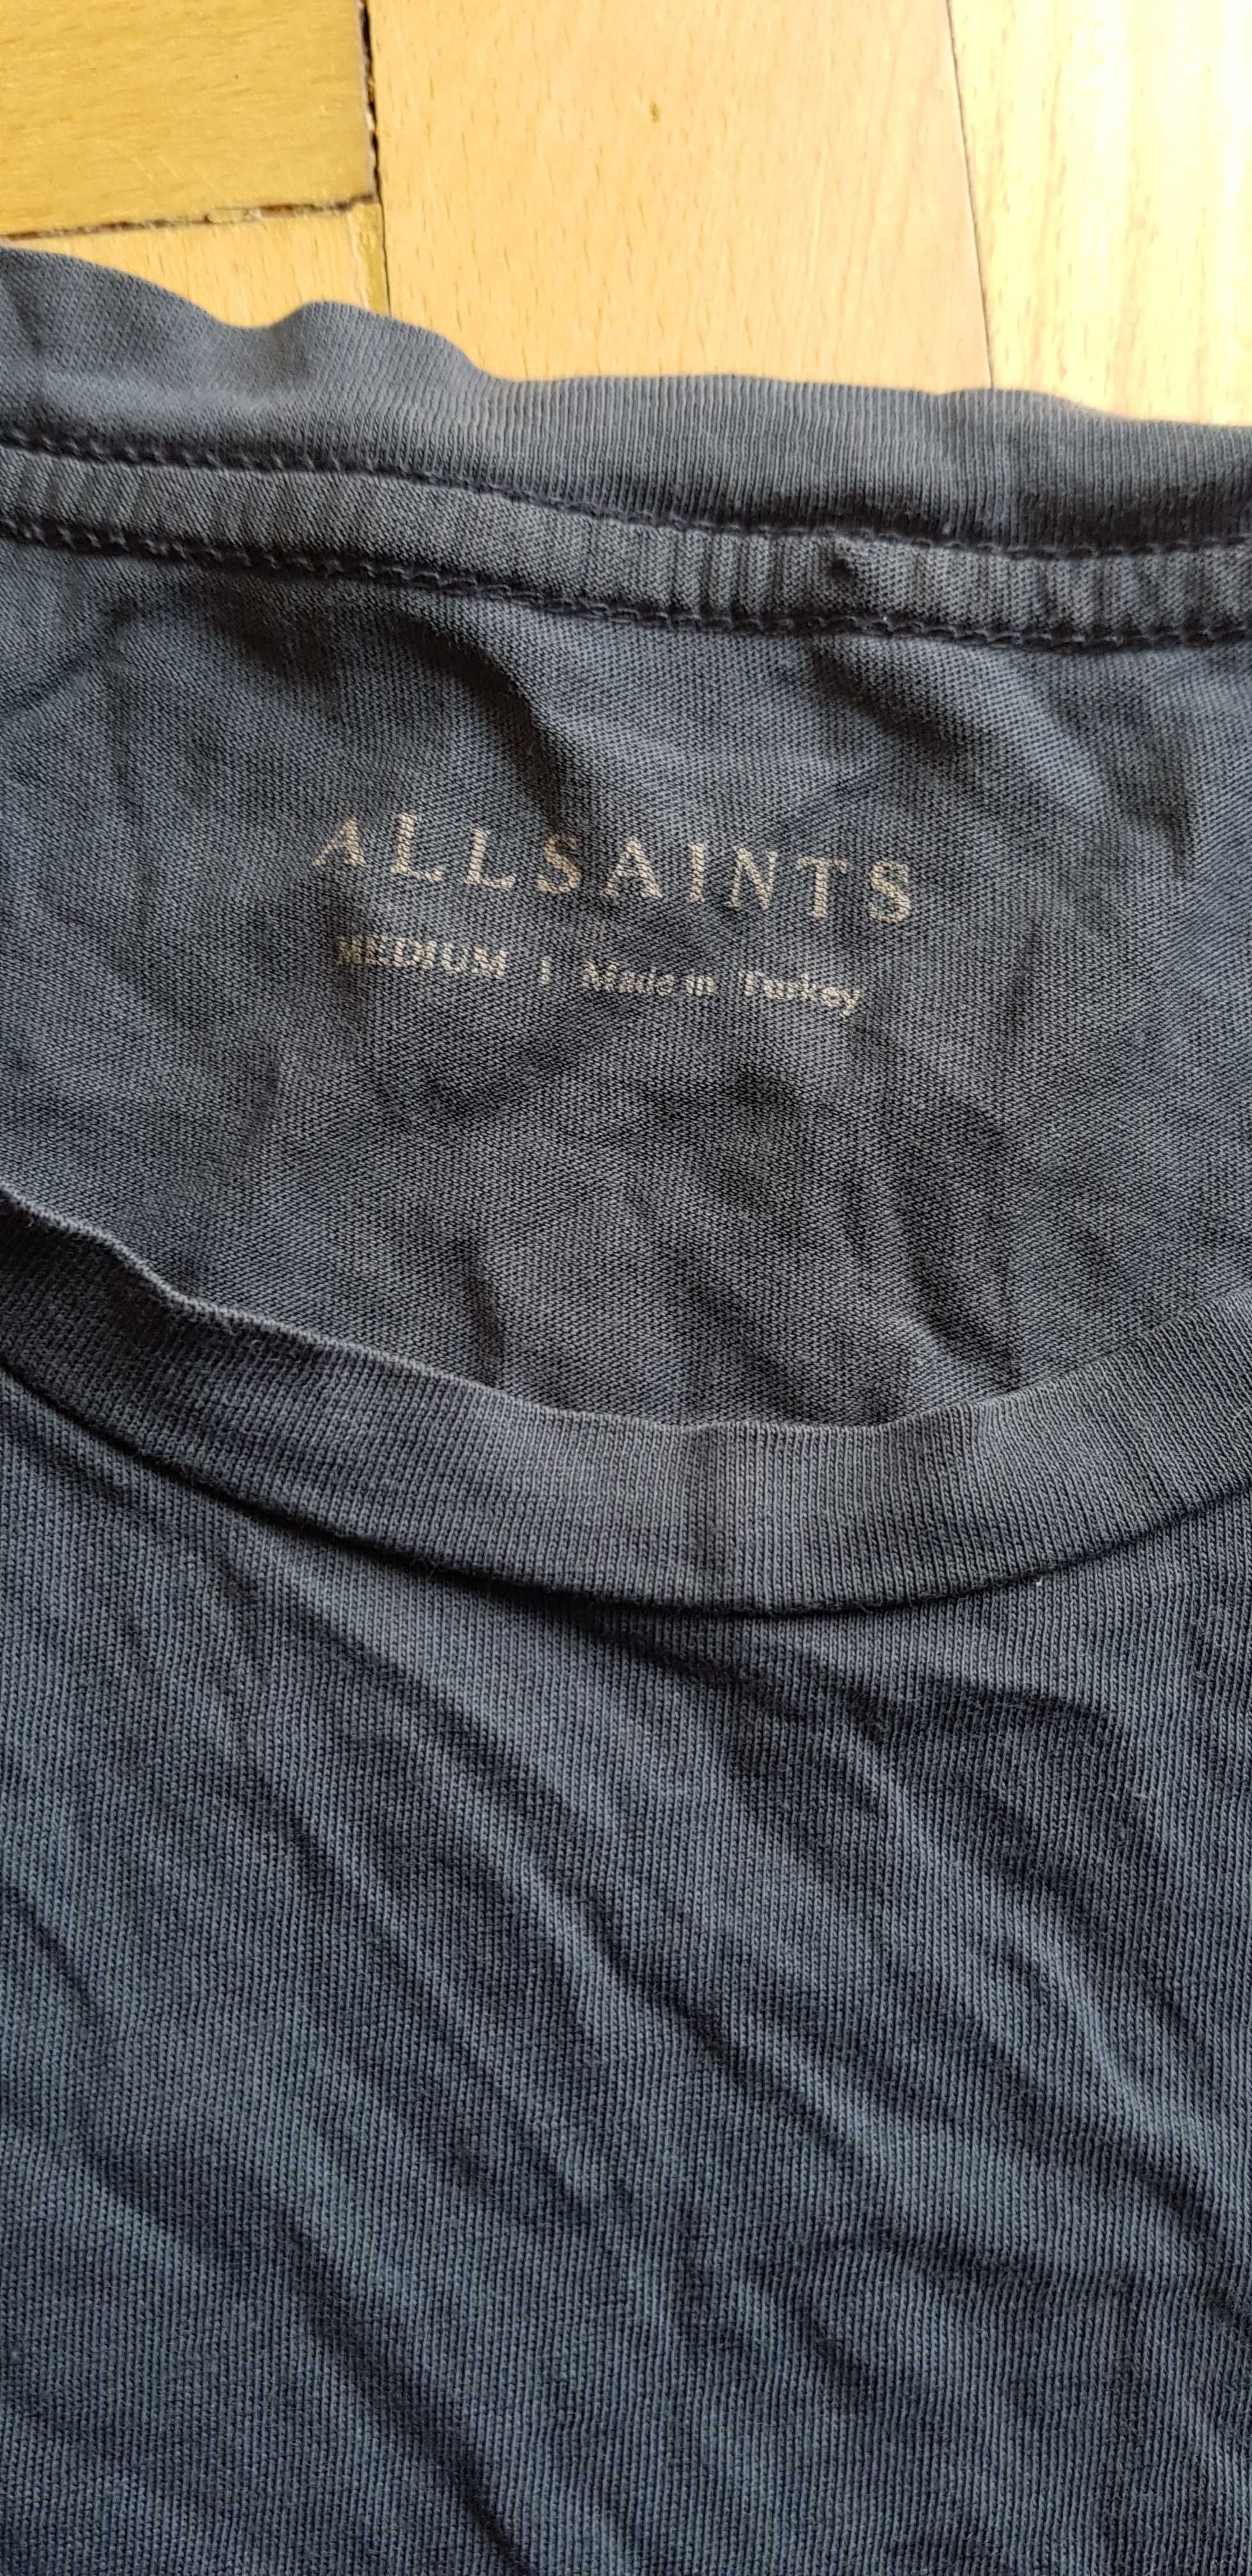 Bawelniany t-shirt, AllSaints